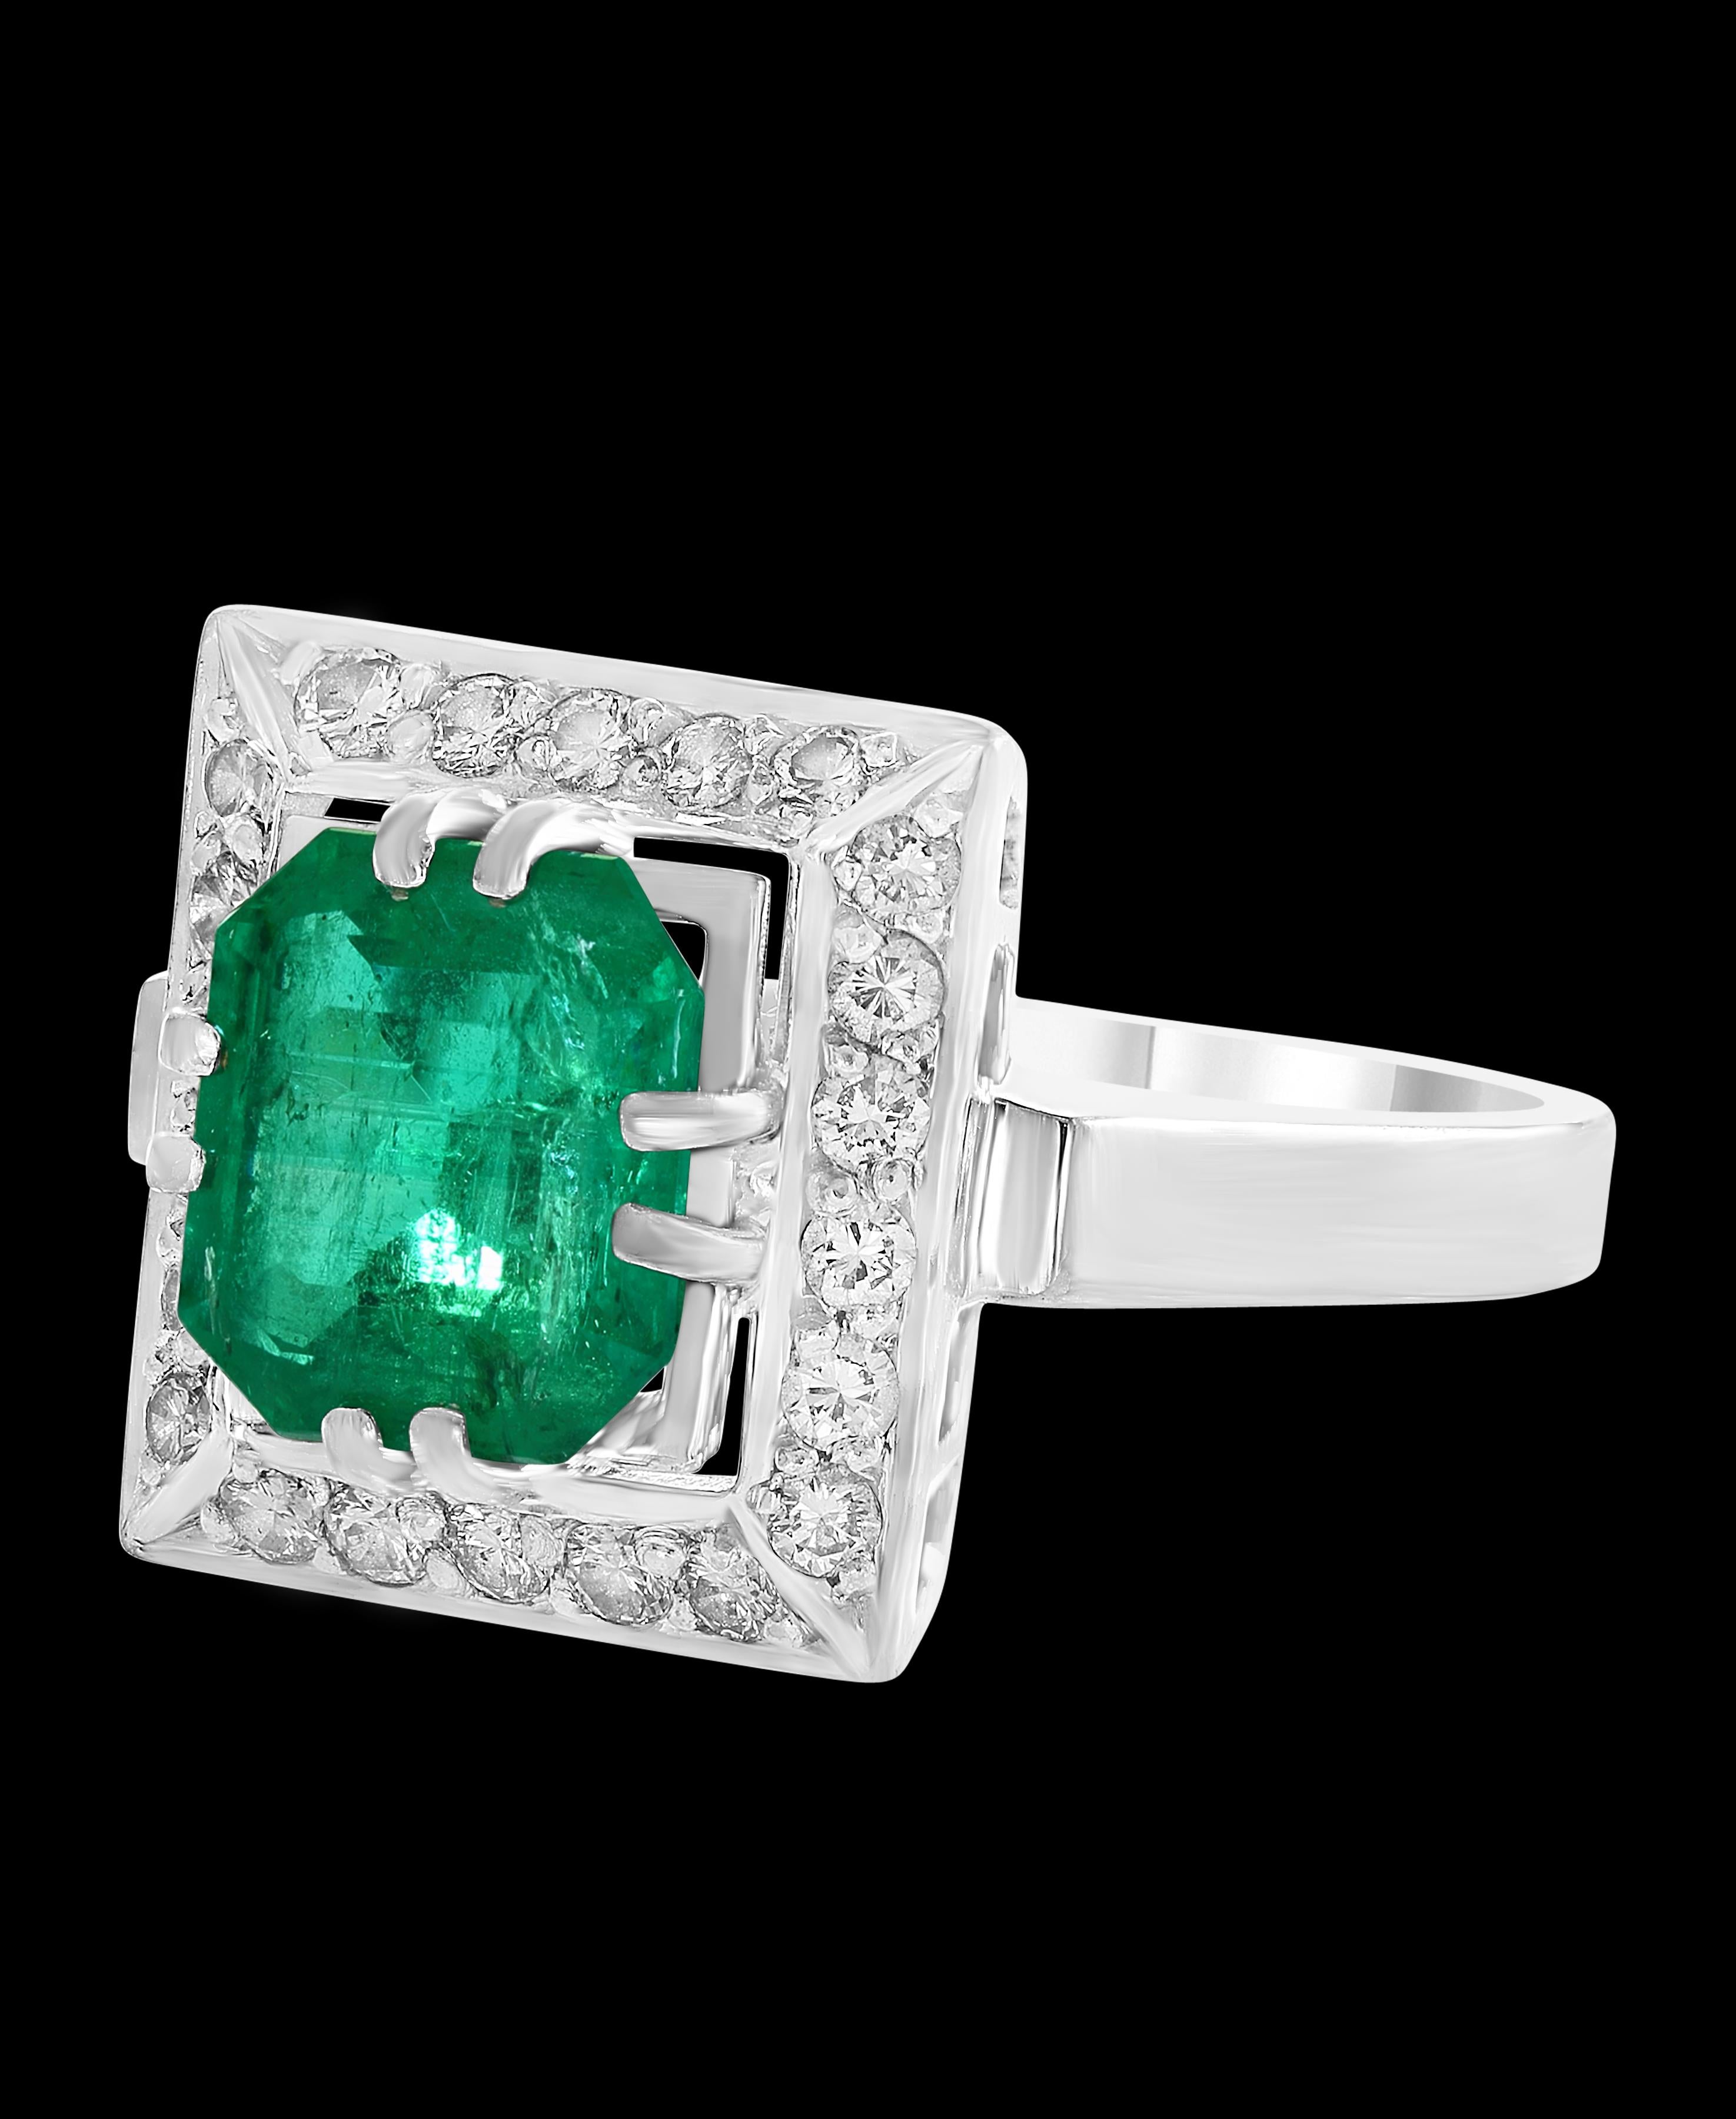 3 carat colombian emerald